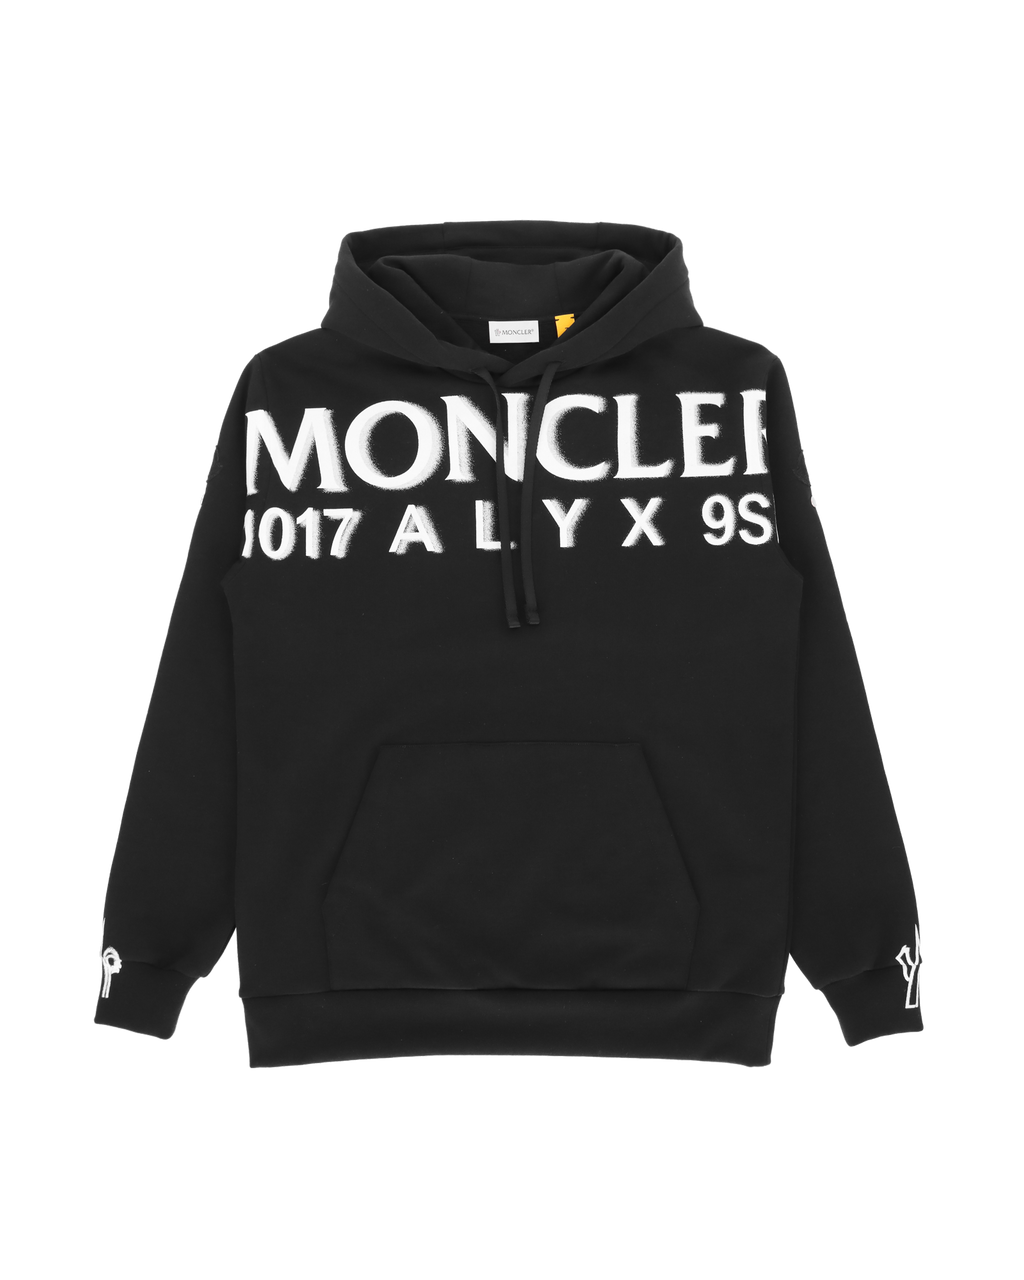 Moncler Zip Hoodie - Size M